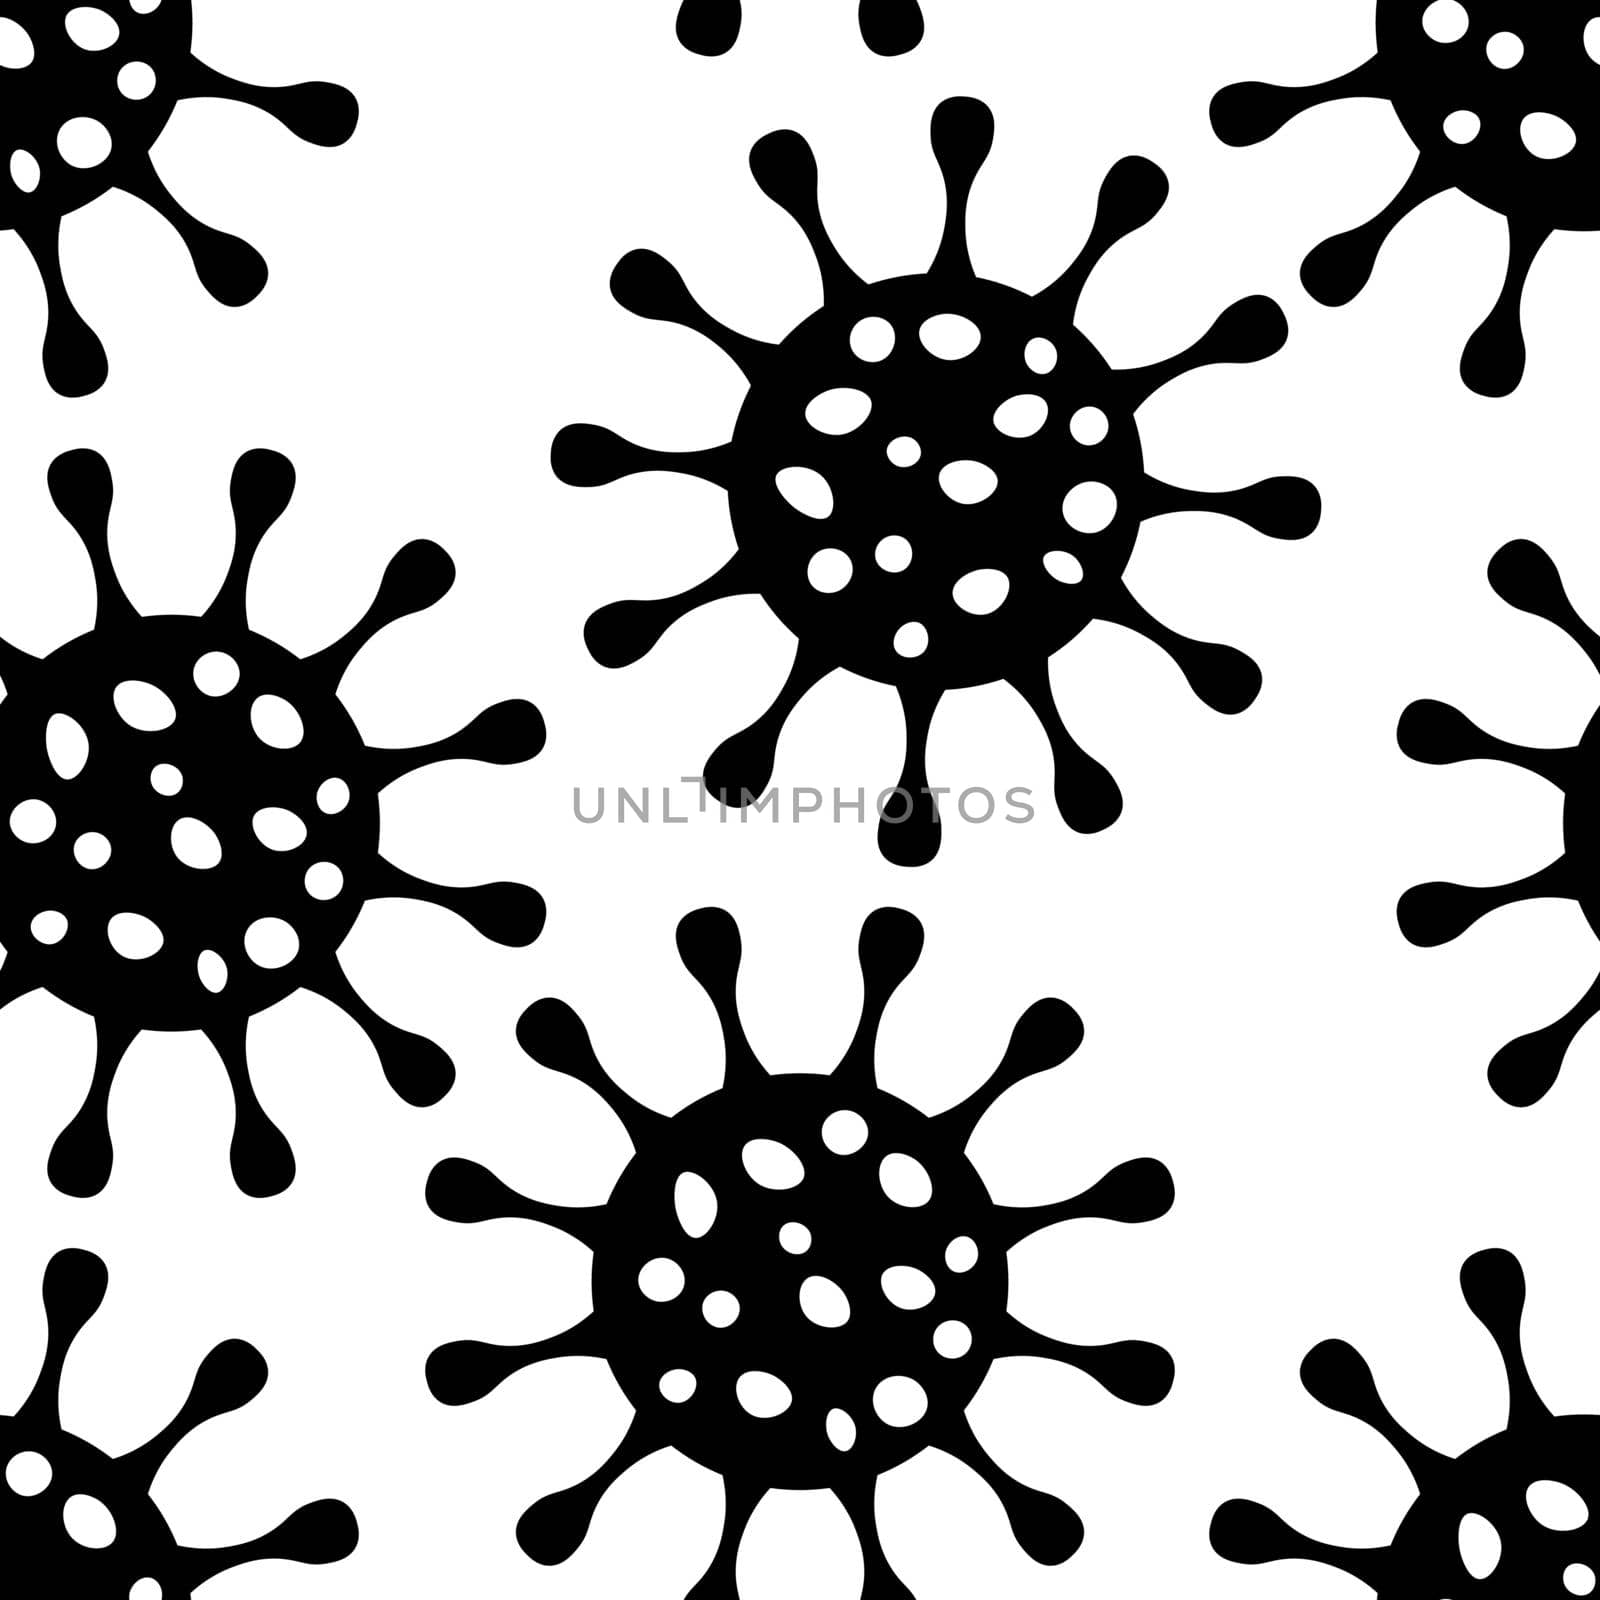 Medical seamless pattern with bacteria on white background. Stop COVID-19. Coronavirus. Pneumonia. Virus infection epidemic sick